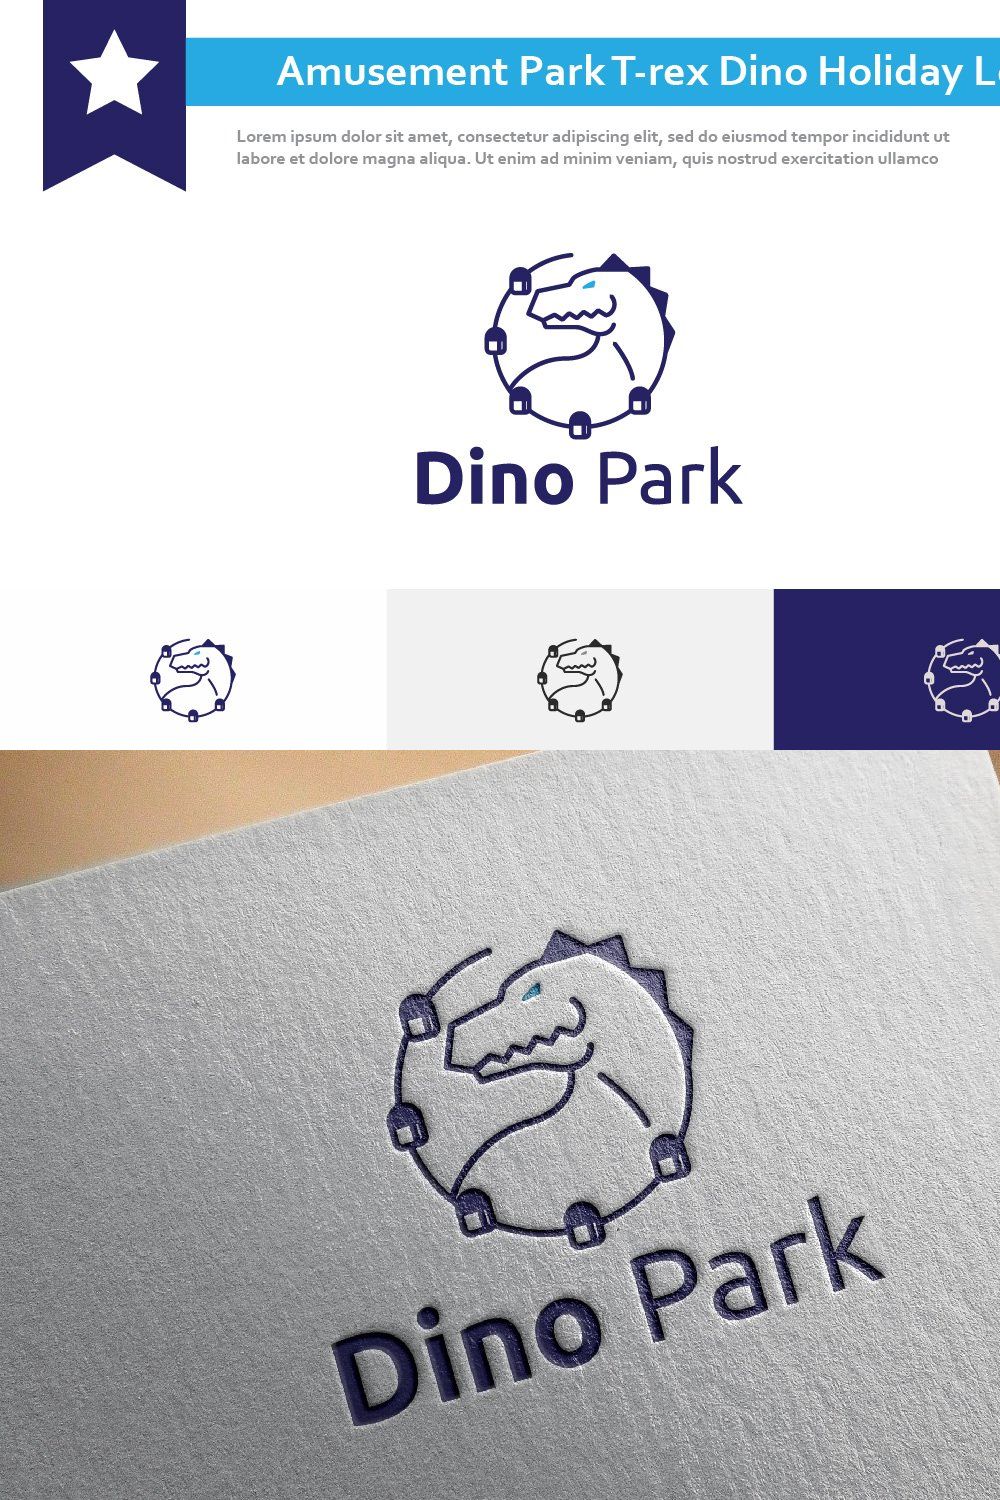 Amusement Park Dinosaur Dino Logo pinterest preview image.